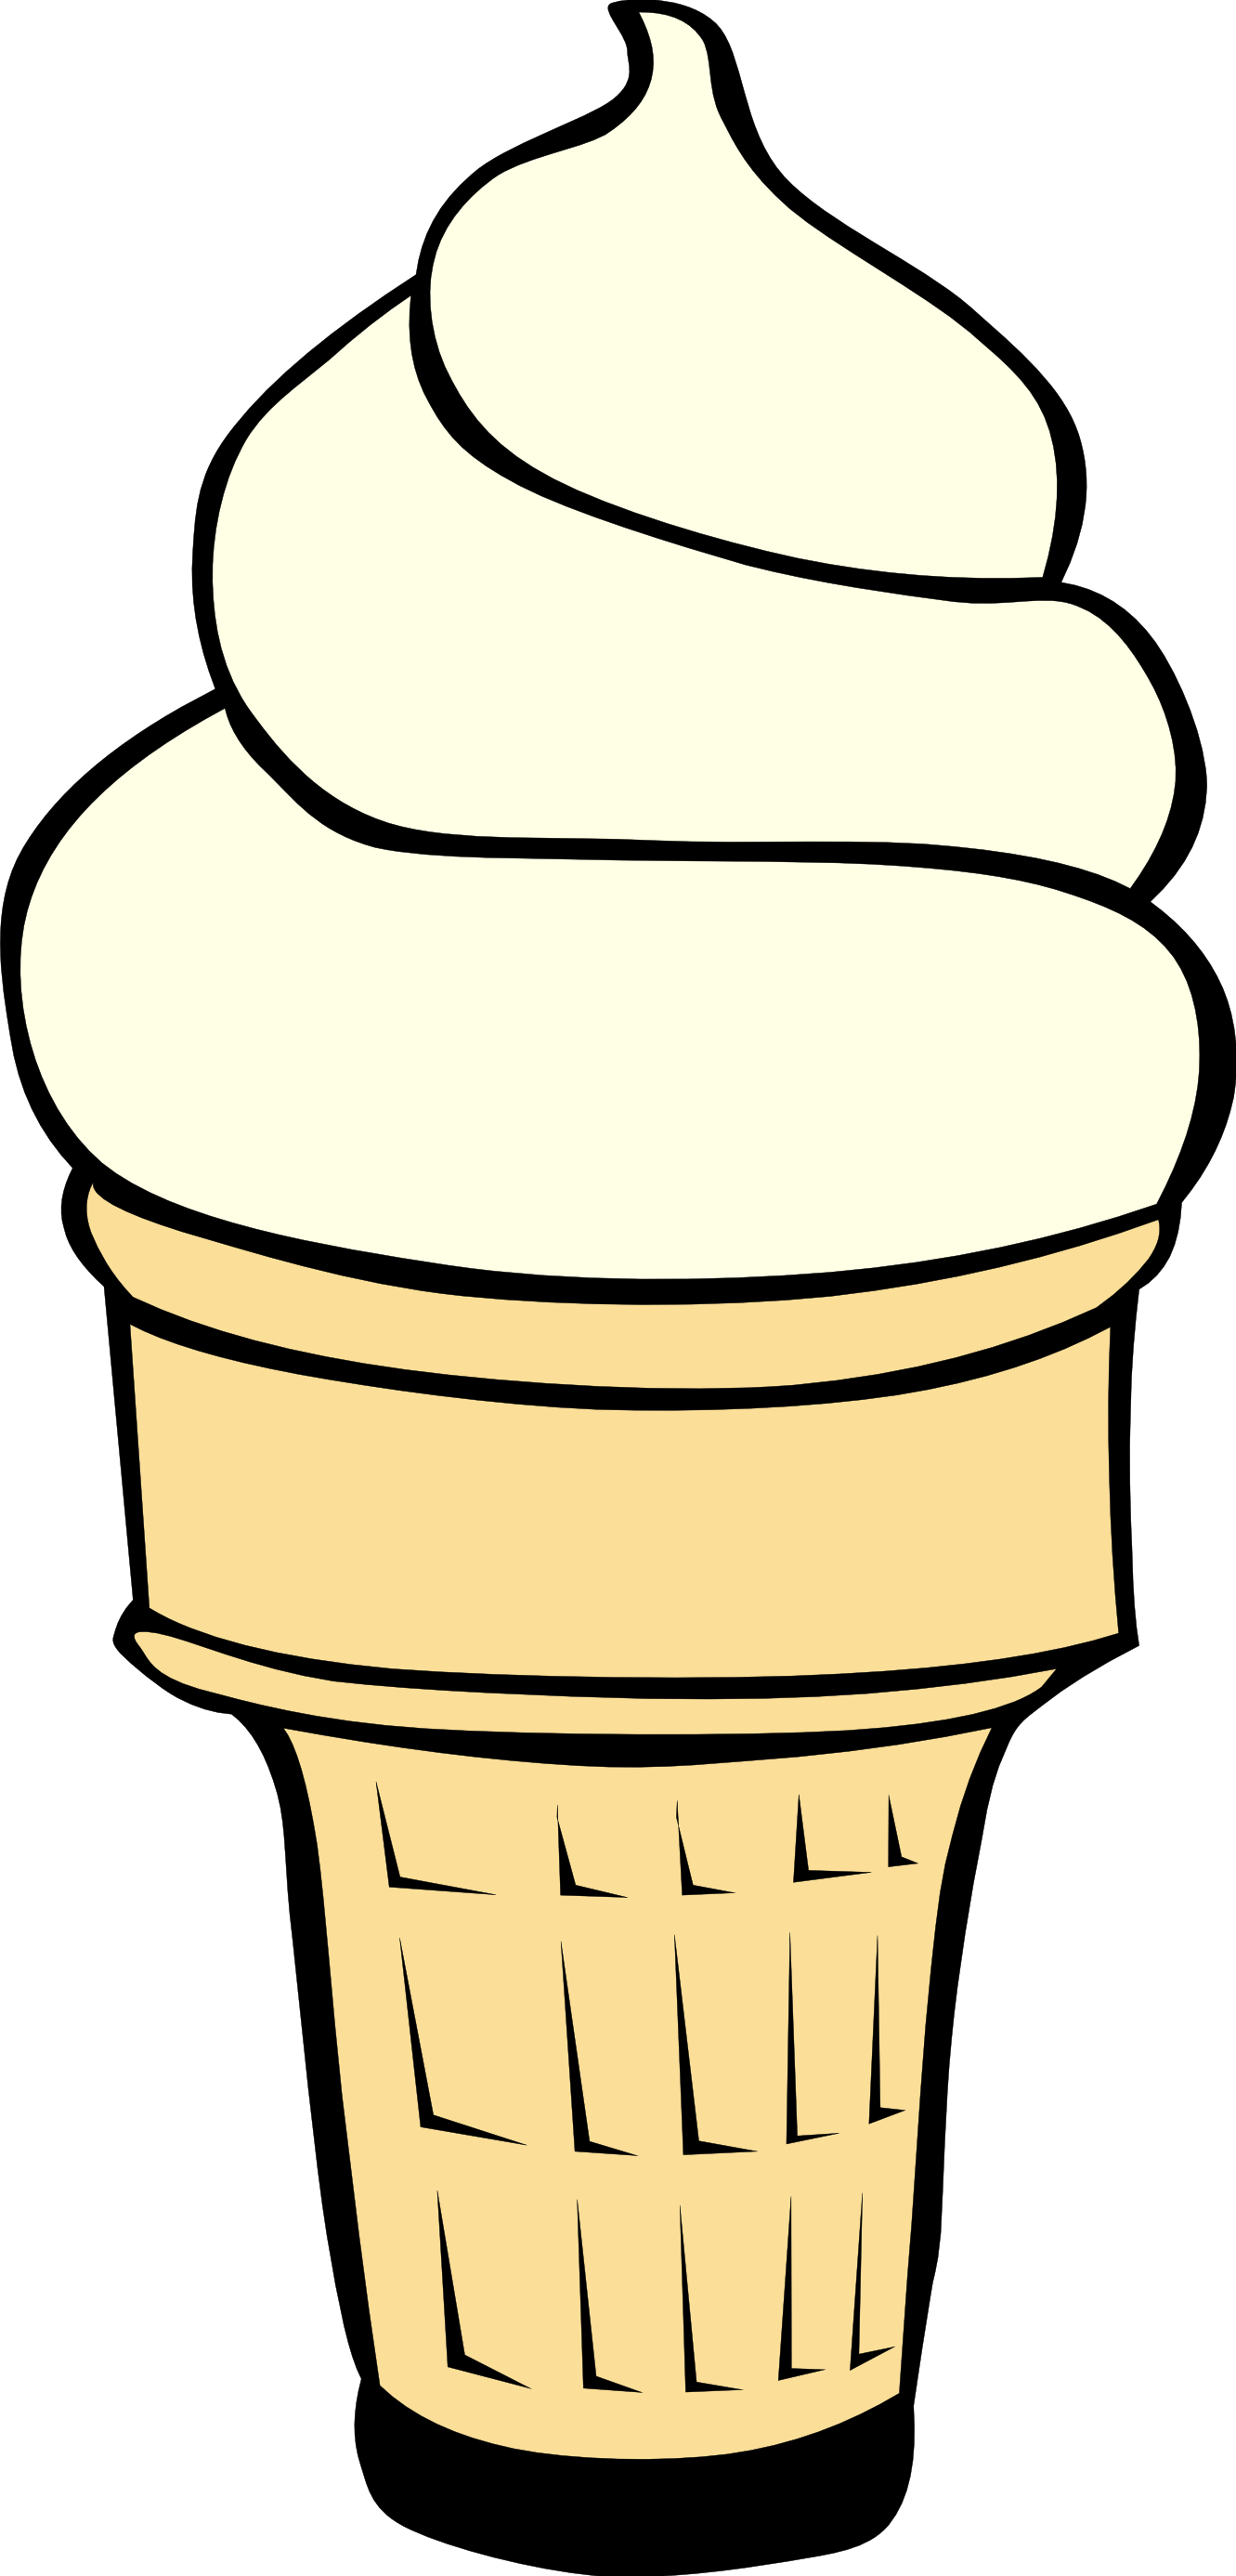 Ice cream  black and white melting ice cream cone clipart black and white clipartfest 3